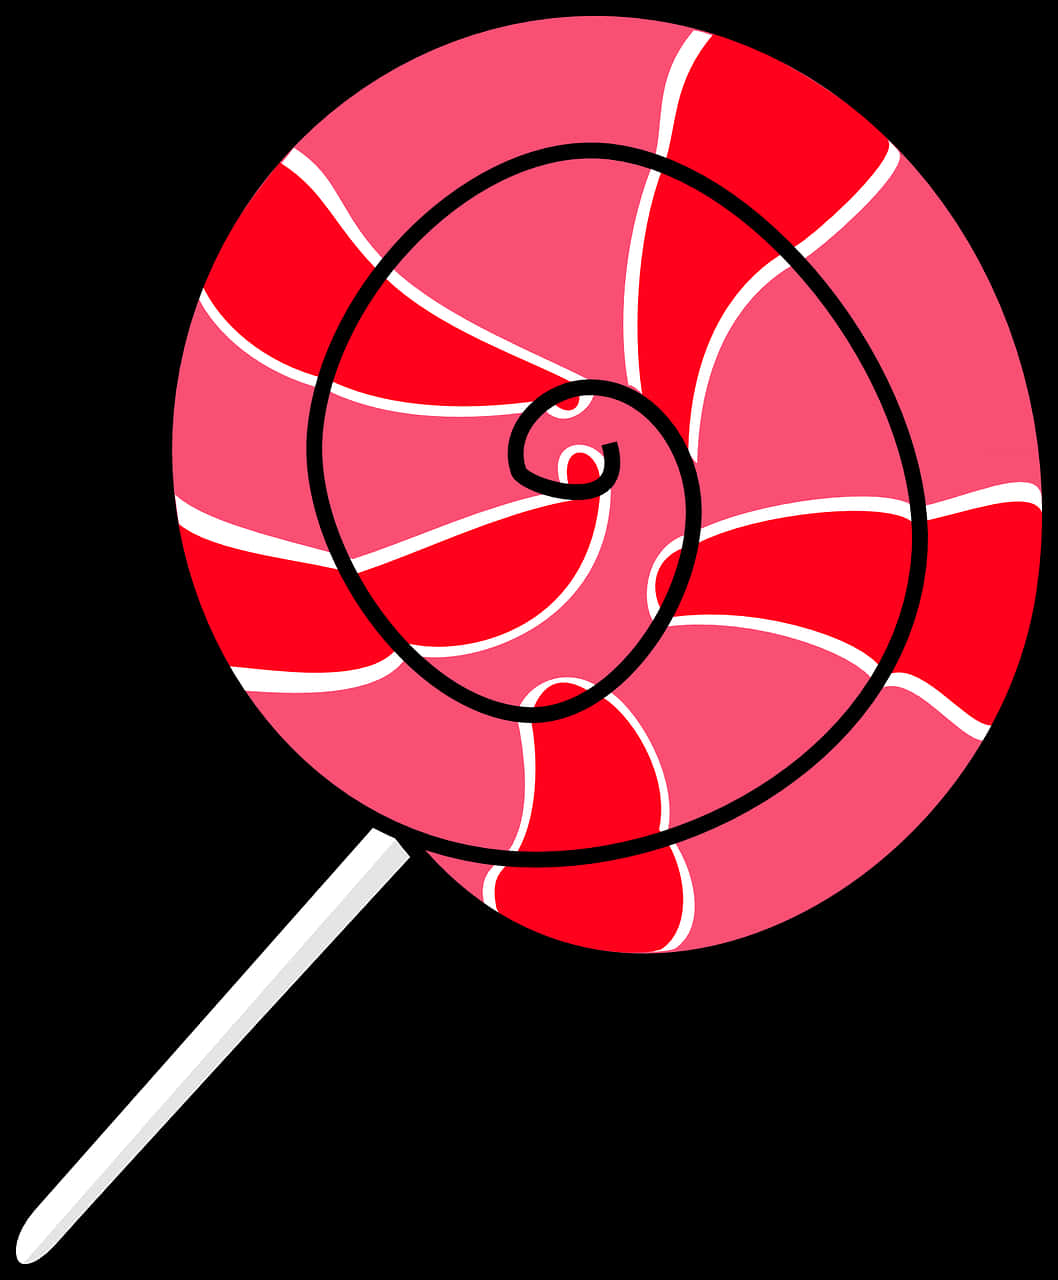 Red Swirl Lollipop Illustration PNG